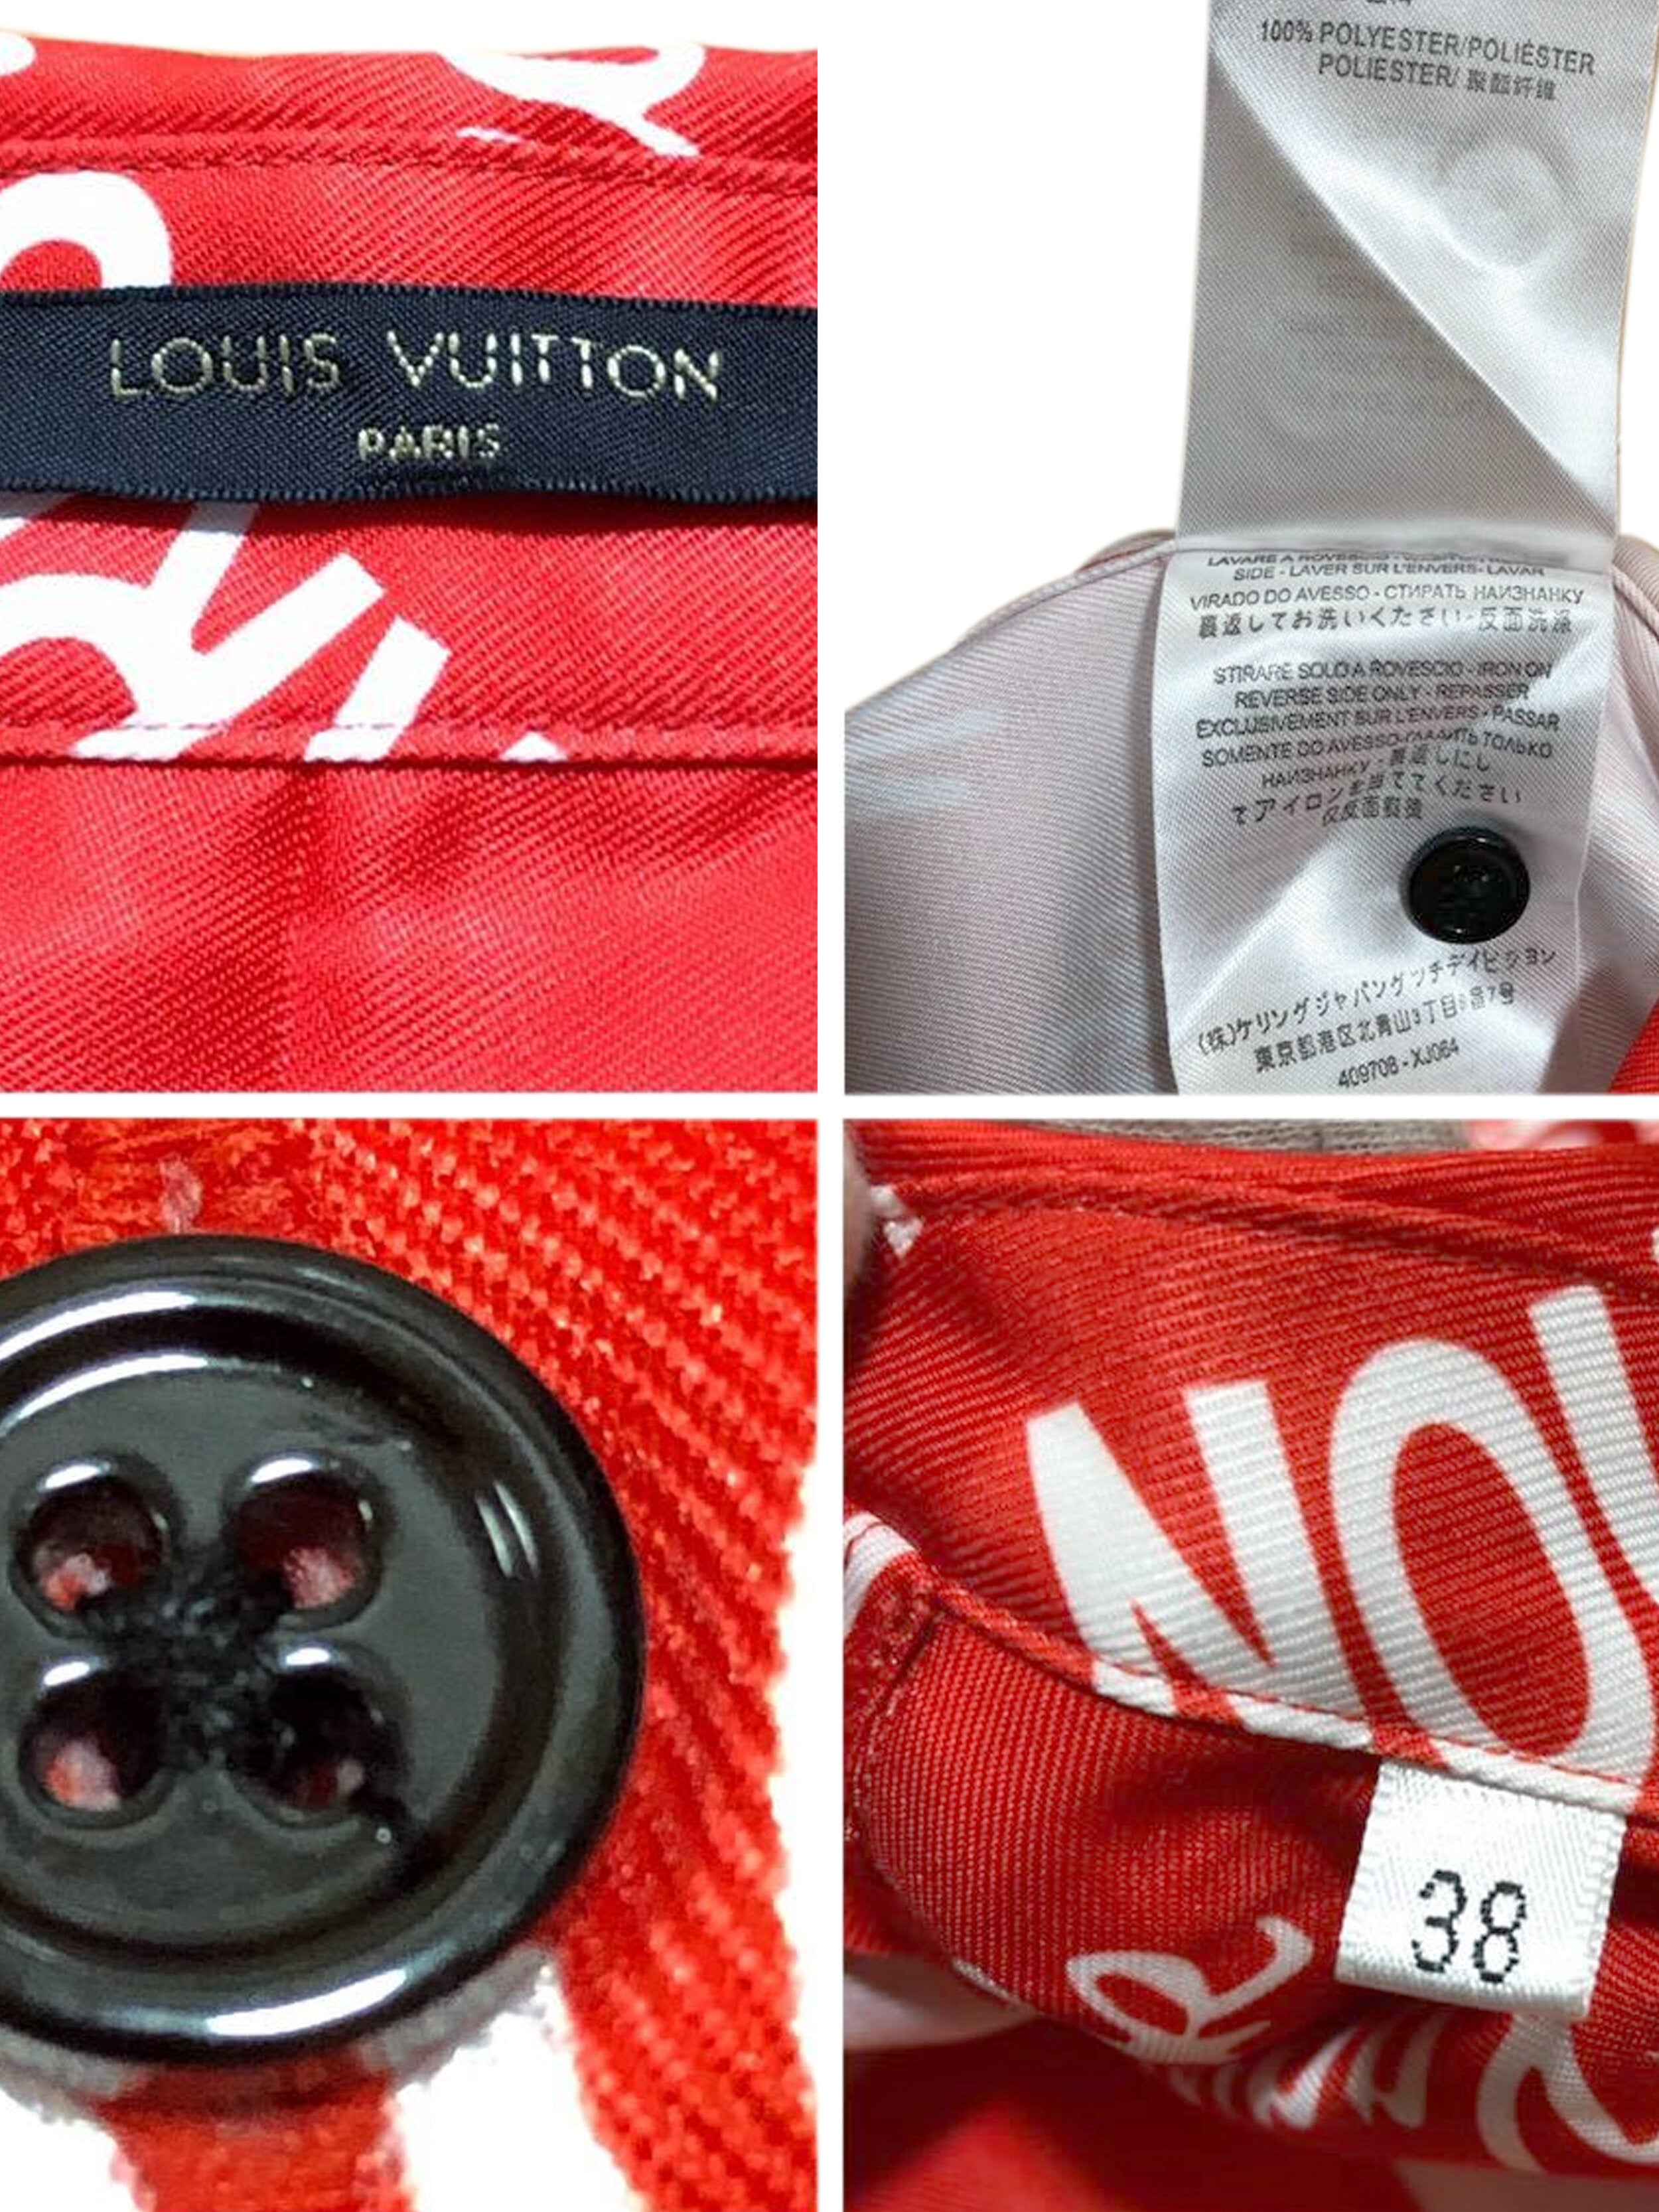 Unisex Louis Vuitton Black Long Sleeve Button Down Long Sleeve Shirt Size 38